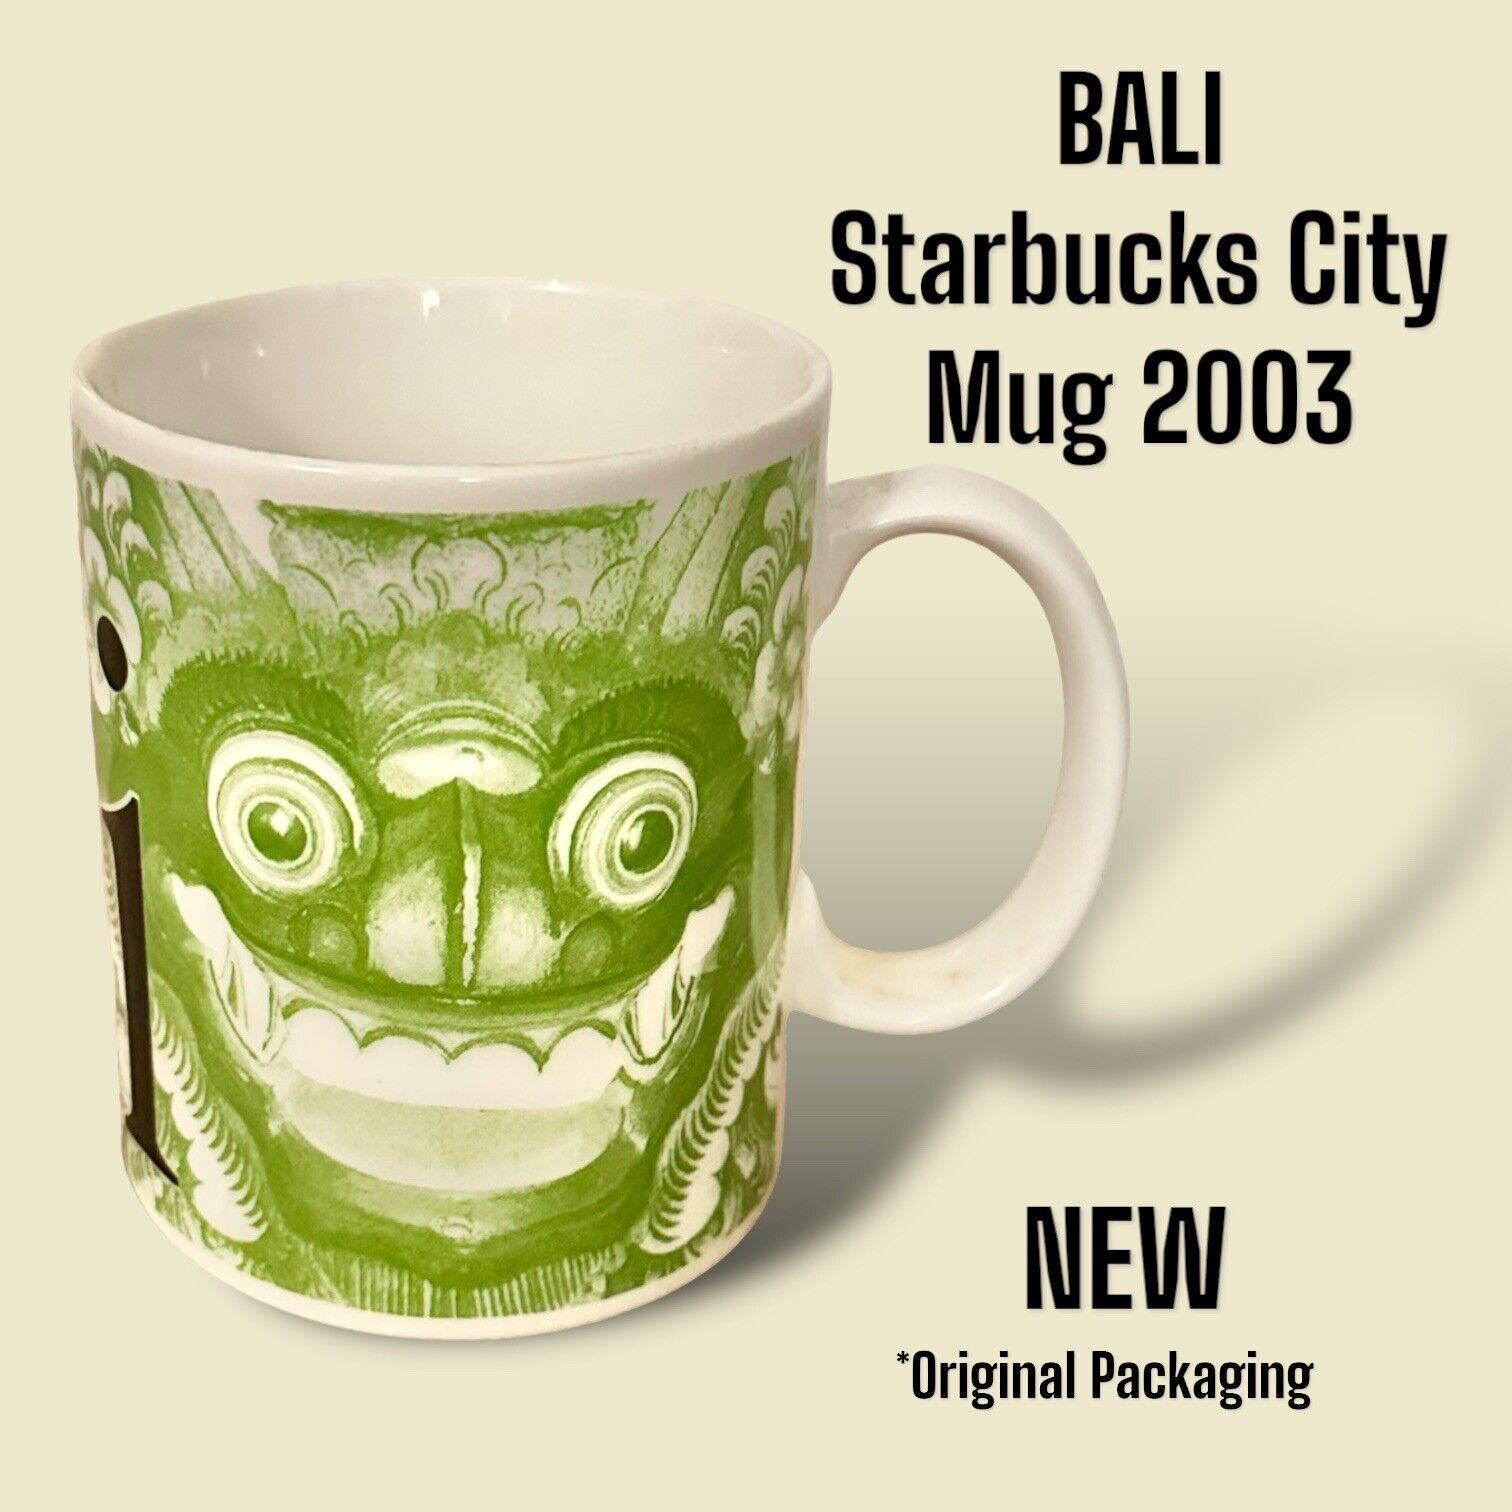 STARBUCKS BALI City Mug 2003 Original Packaging Purchased in Bali NEW